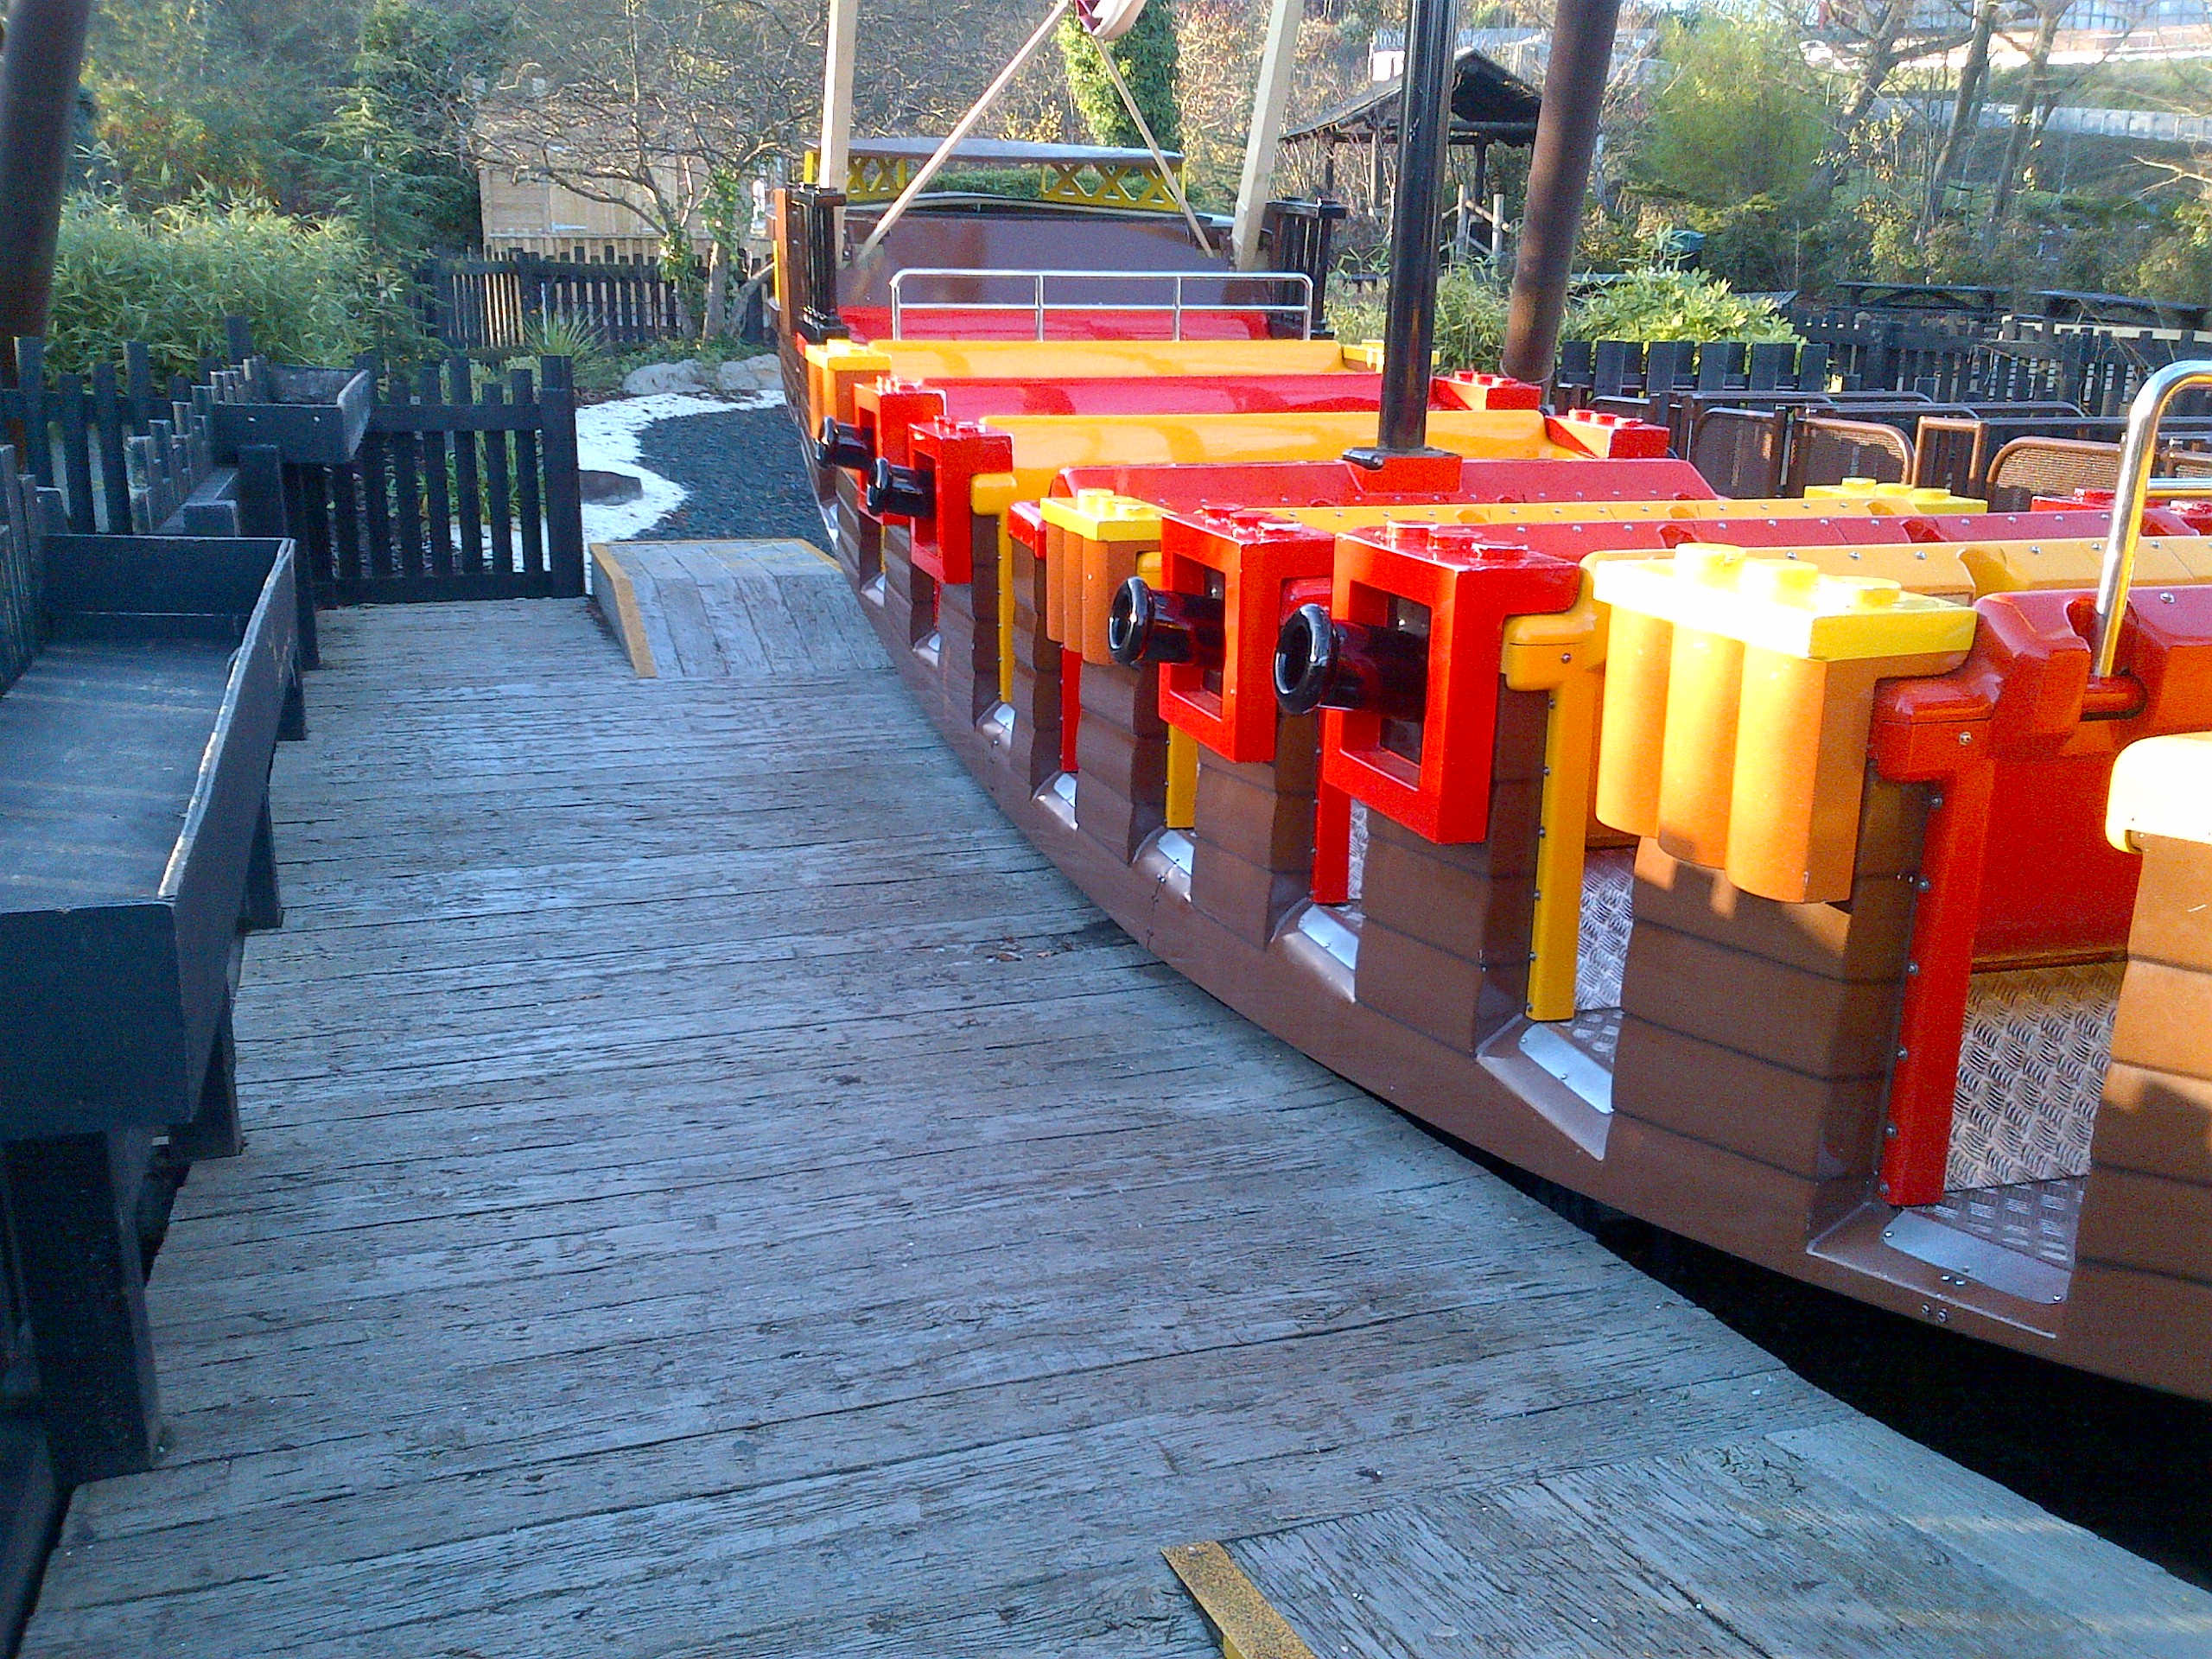 Millboard at Legoland